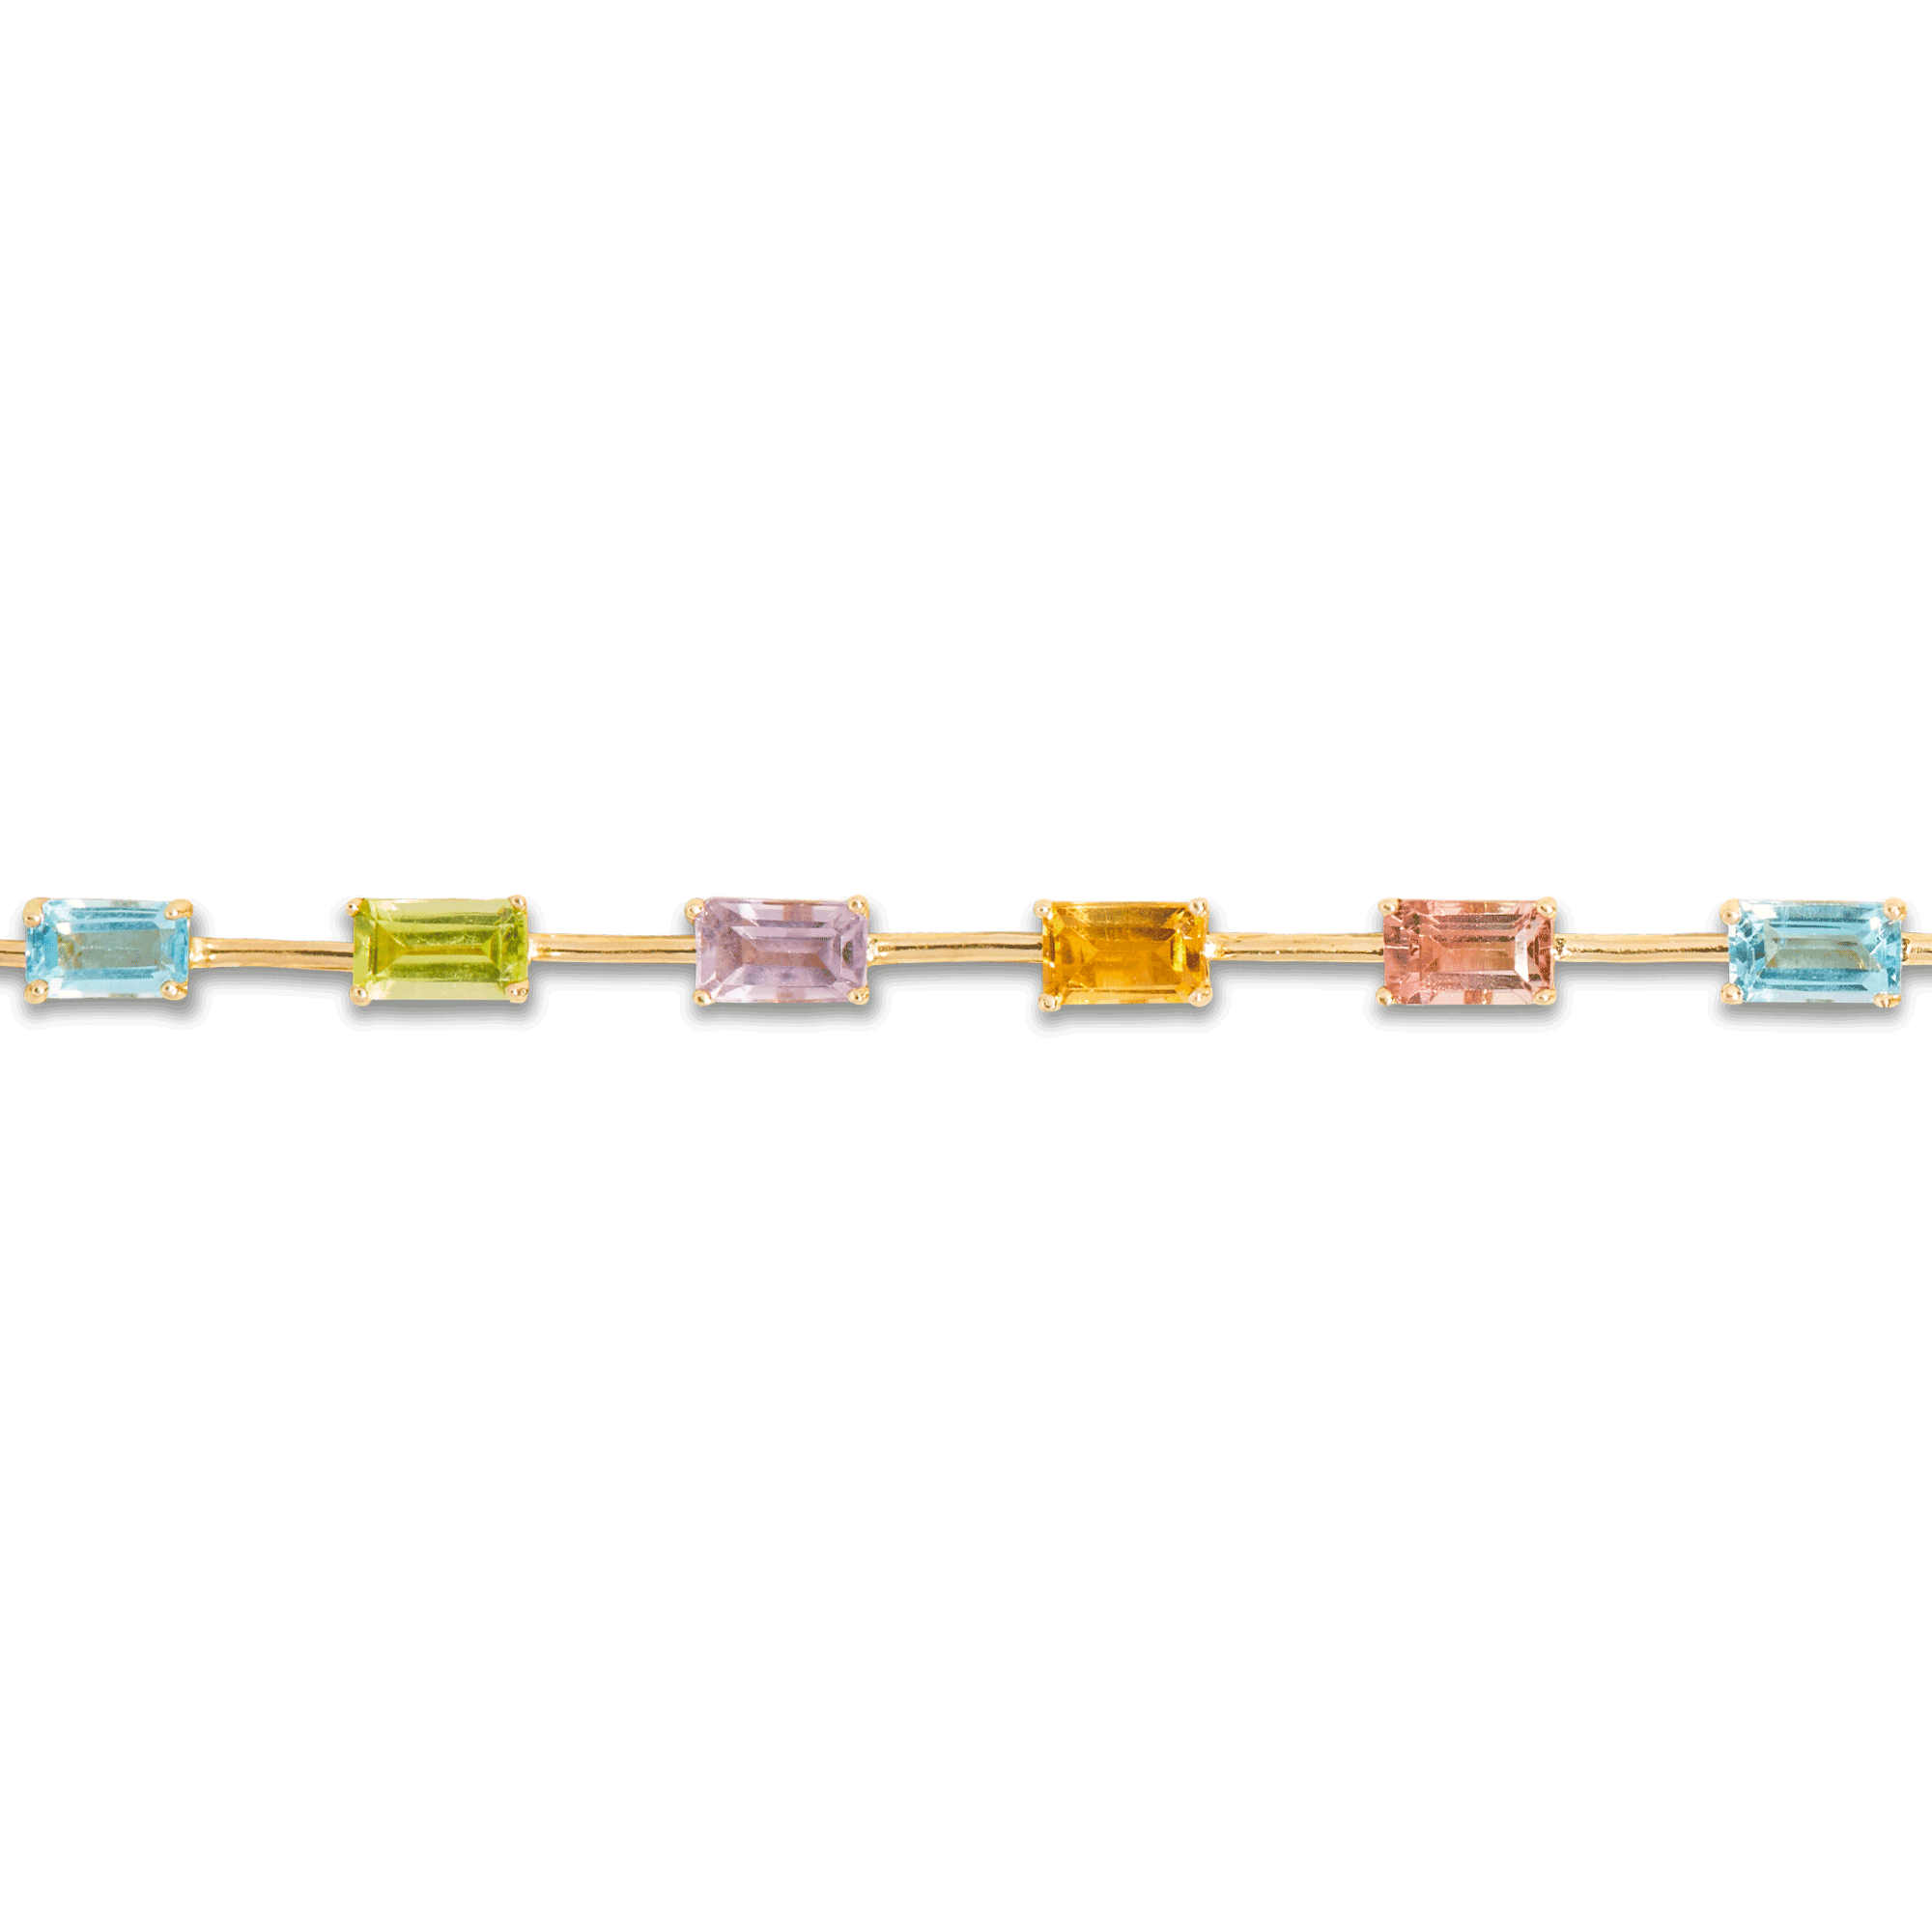 The Unicorn Bracelet - Solid Gold 14K Silk Knotted Unicorn Colorful Bracelet, Multi Gemstone Bracelet in A Vivid Rainbow